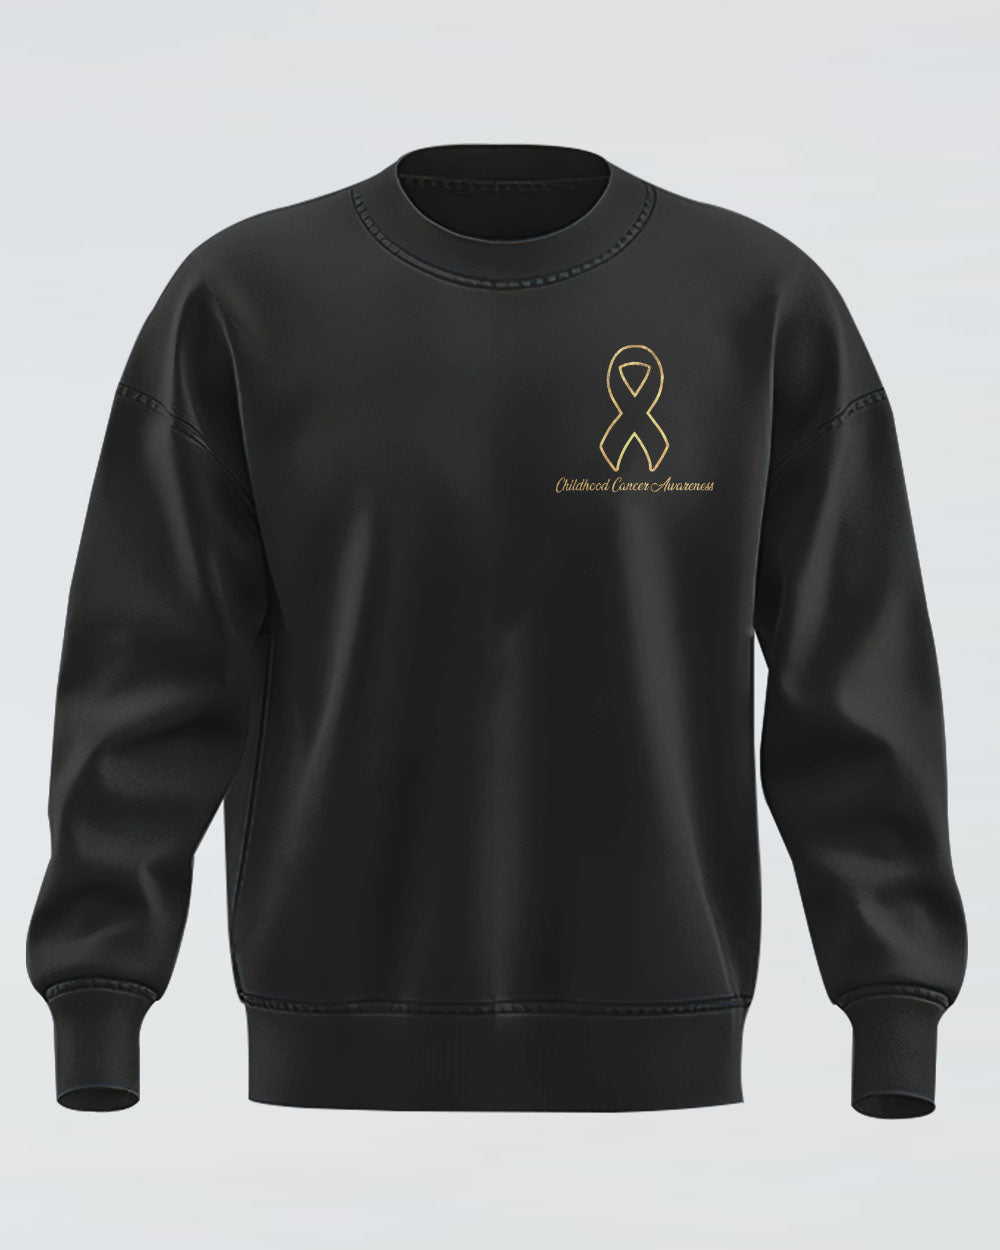 Wings Ribbon Glitter Women's Childhood Cancer Awareness Sweatshirt